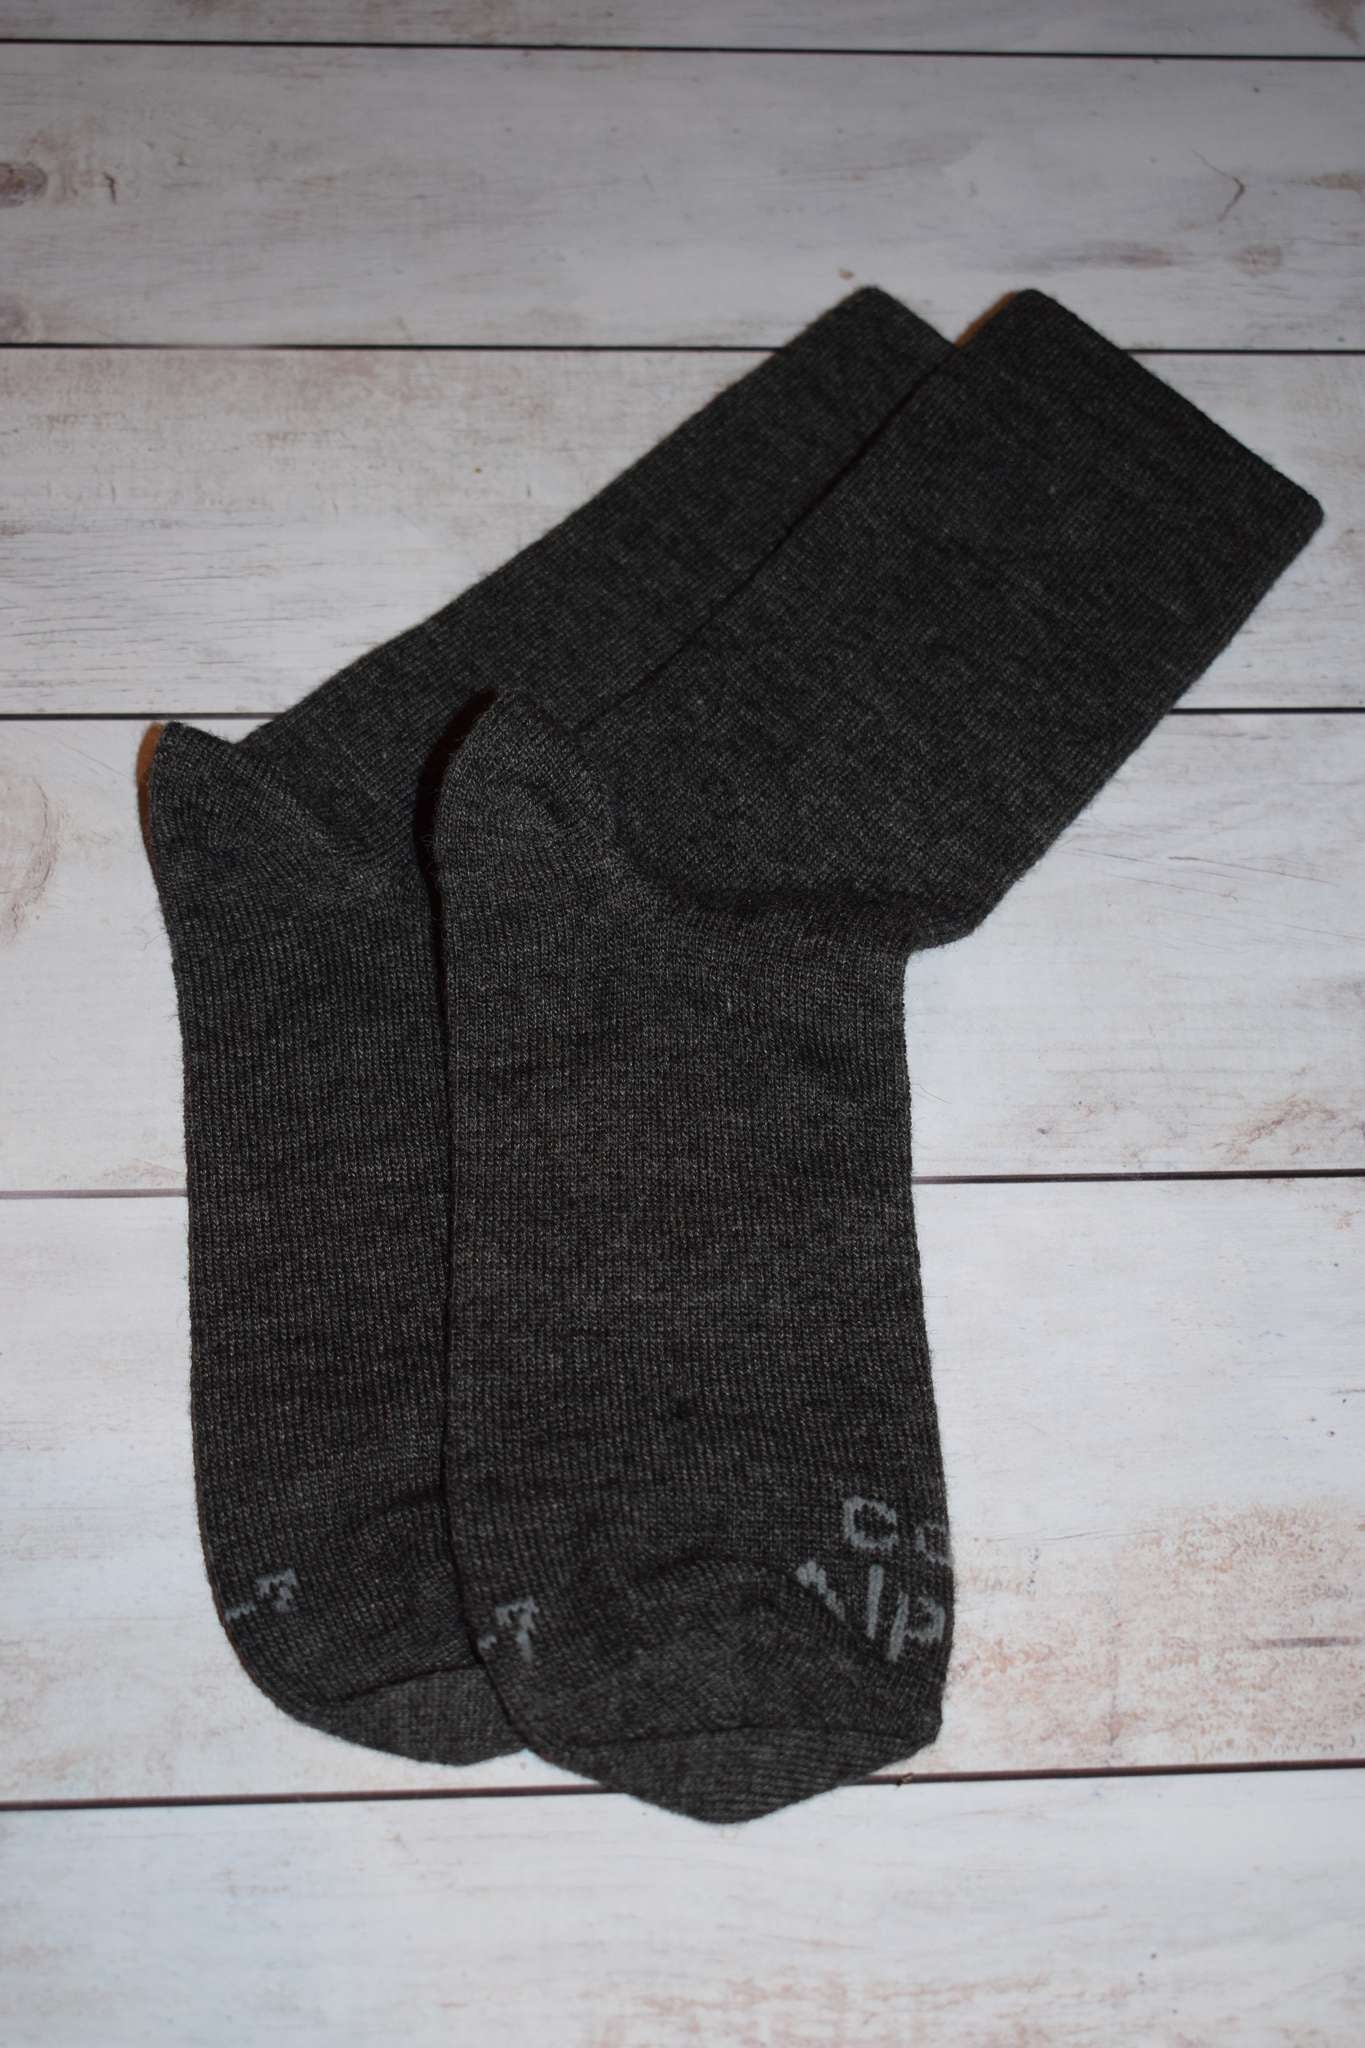 Leisure Socks made from Alpaca Fibre